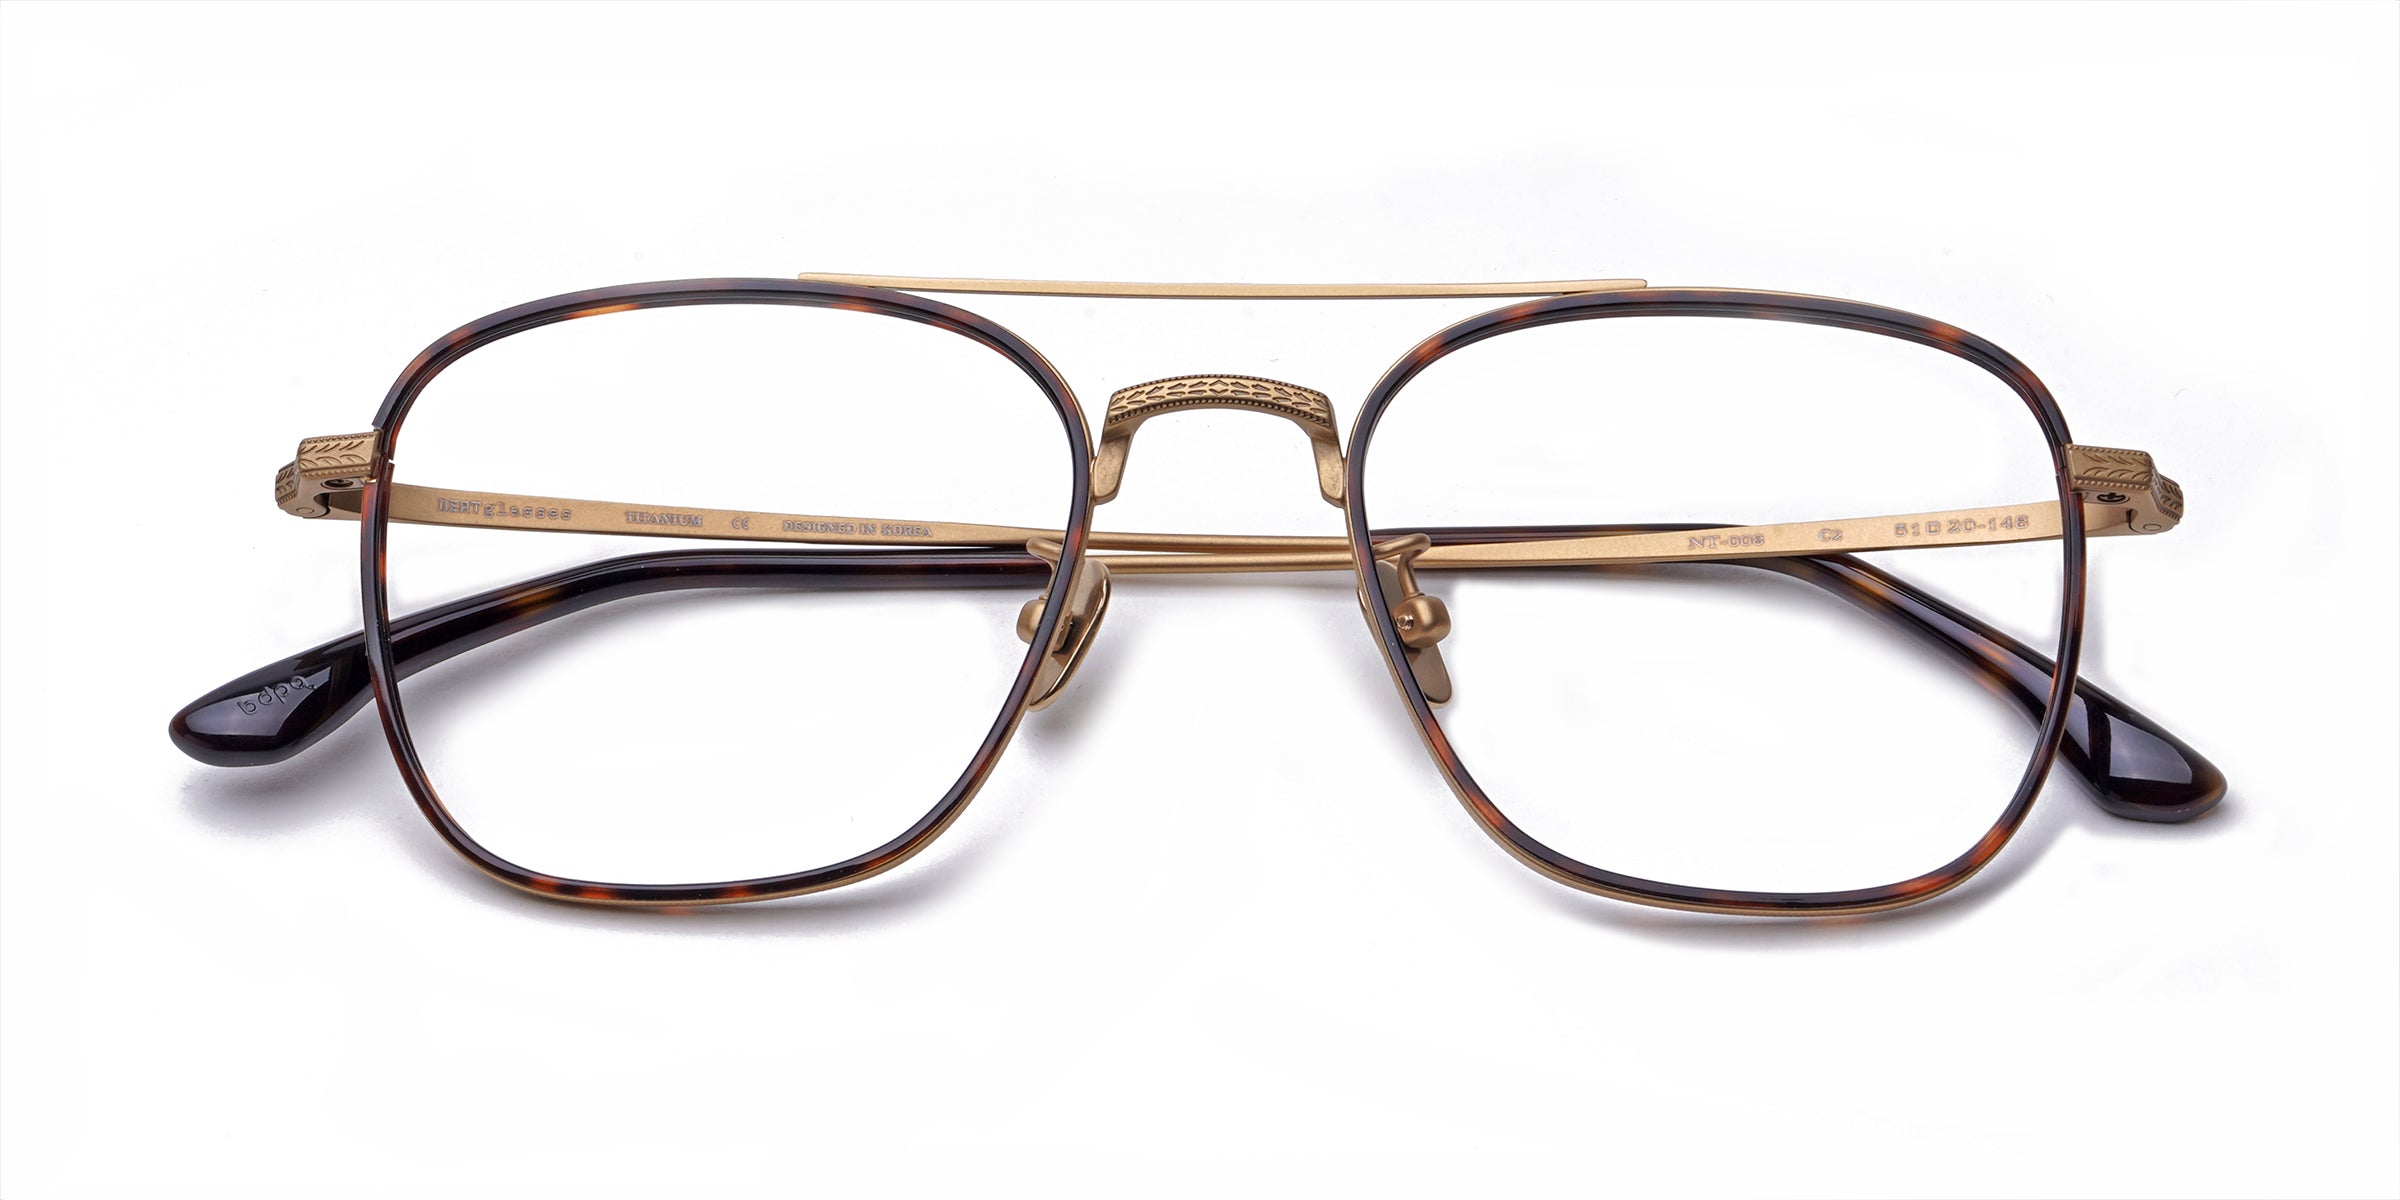 neat glossy tortoiseshell eyeglasses frames top view